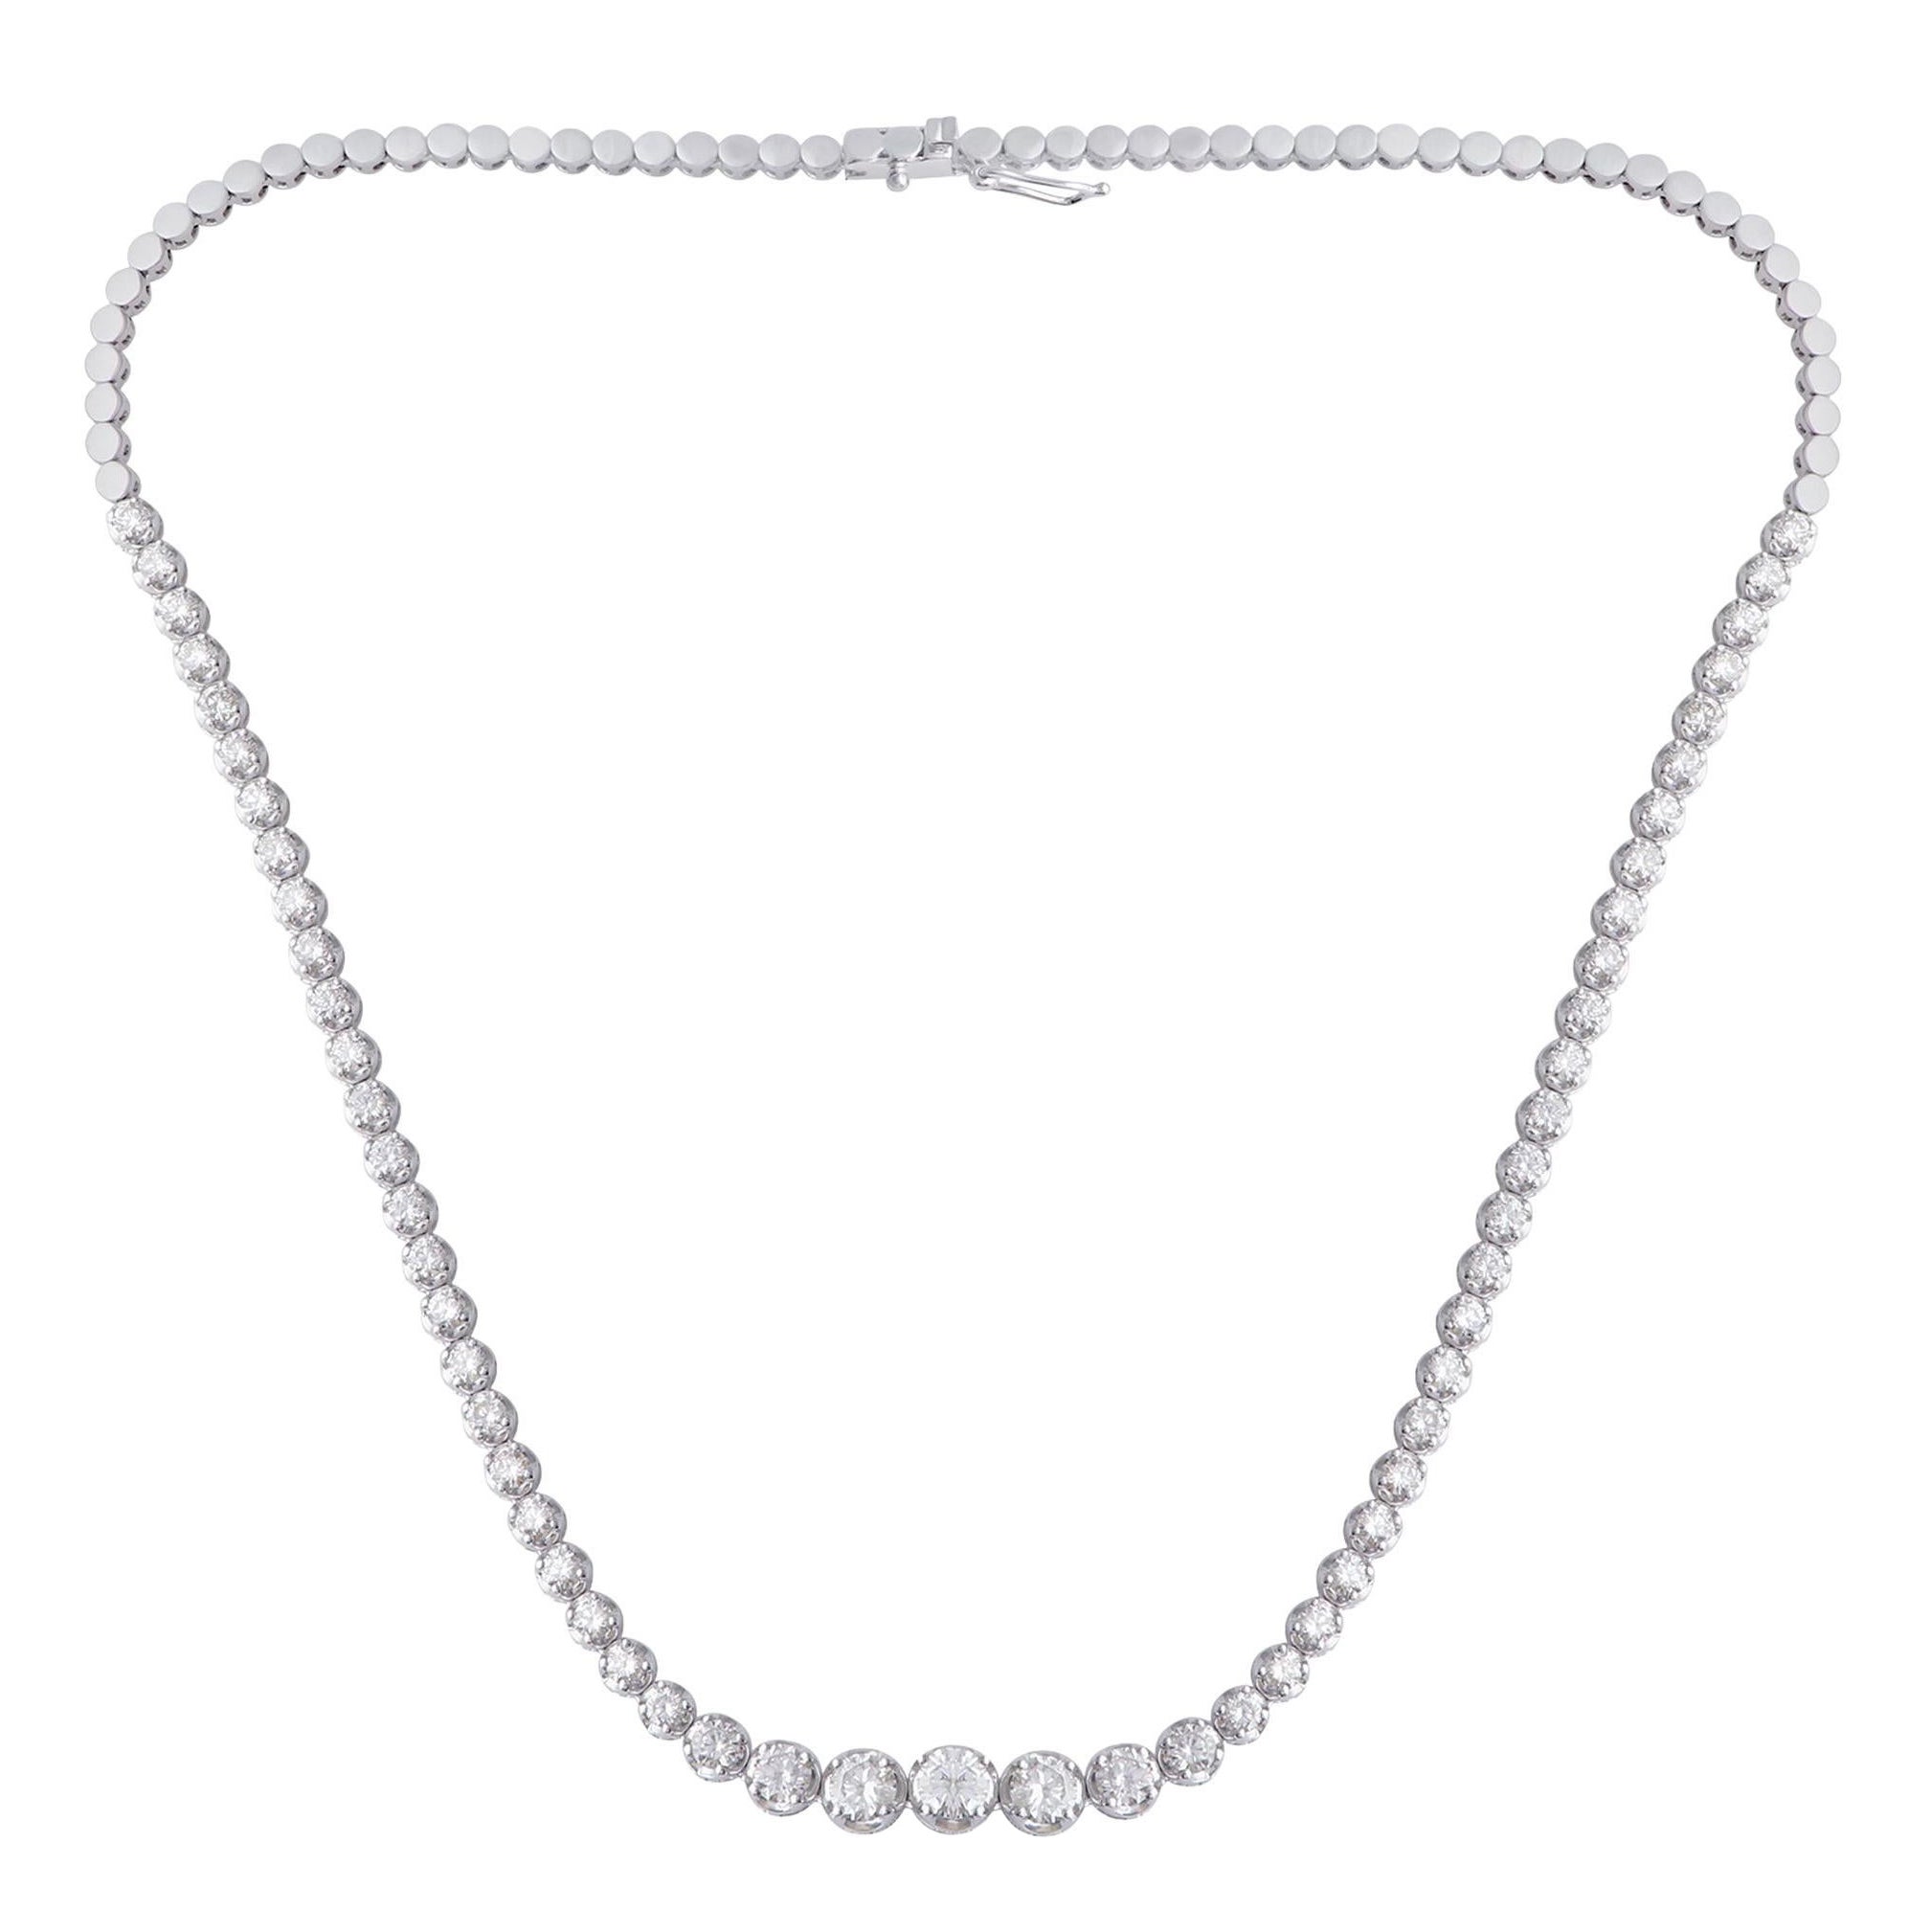 6.1 Carat SI Clarity HI Color Diamond Chain Necklace 14 Karat White Gold Jewelry